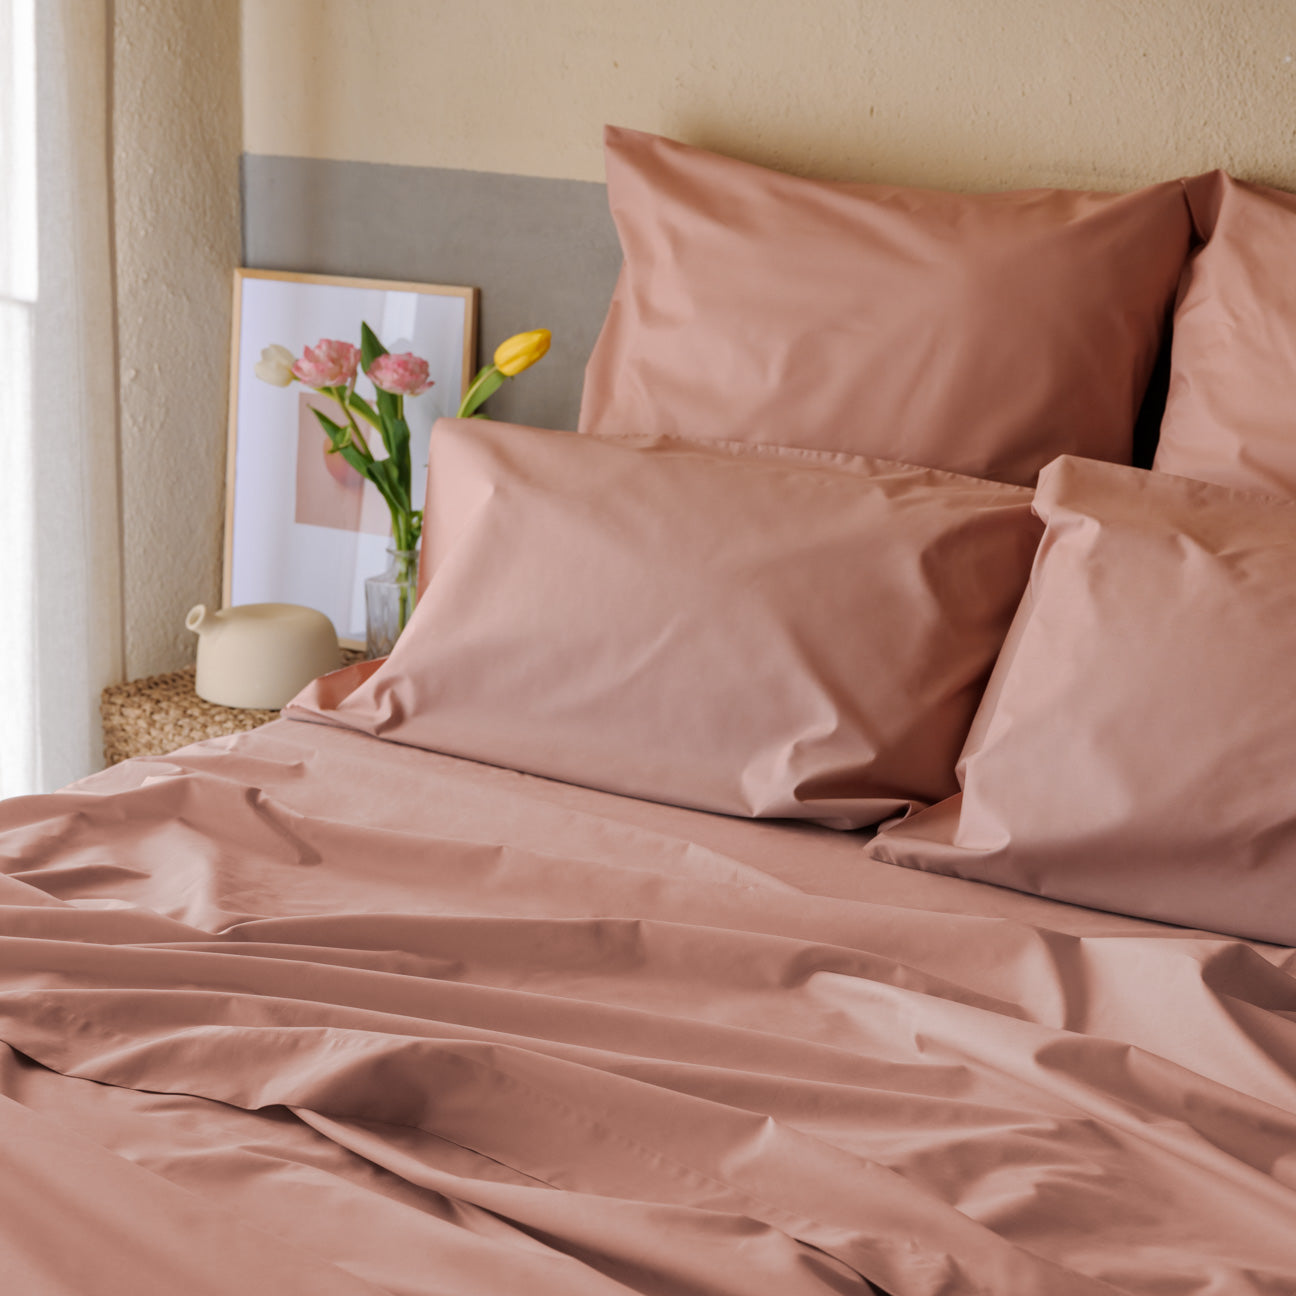 Sábana bajera ajustable lisa Rosa cama 160 cm - 160x190/200 cm, 100%  algodón.